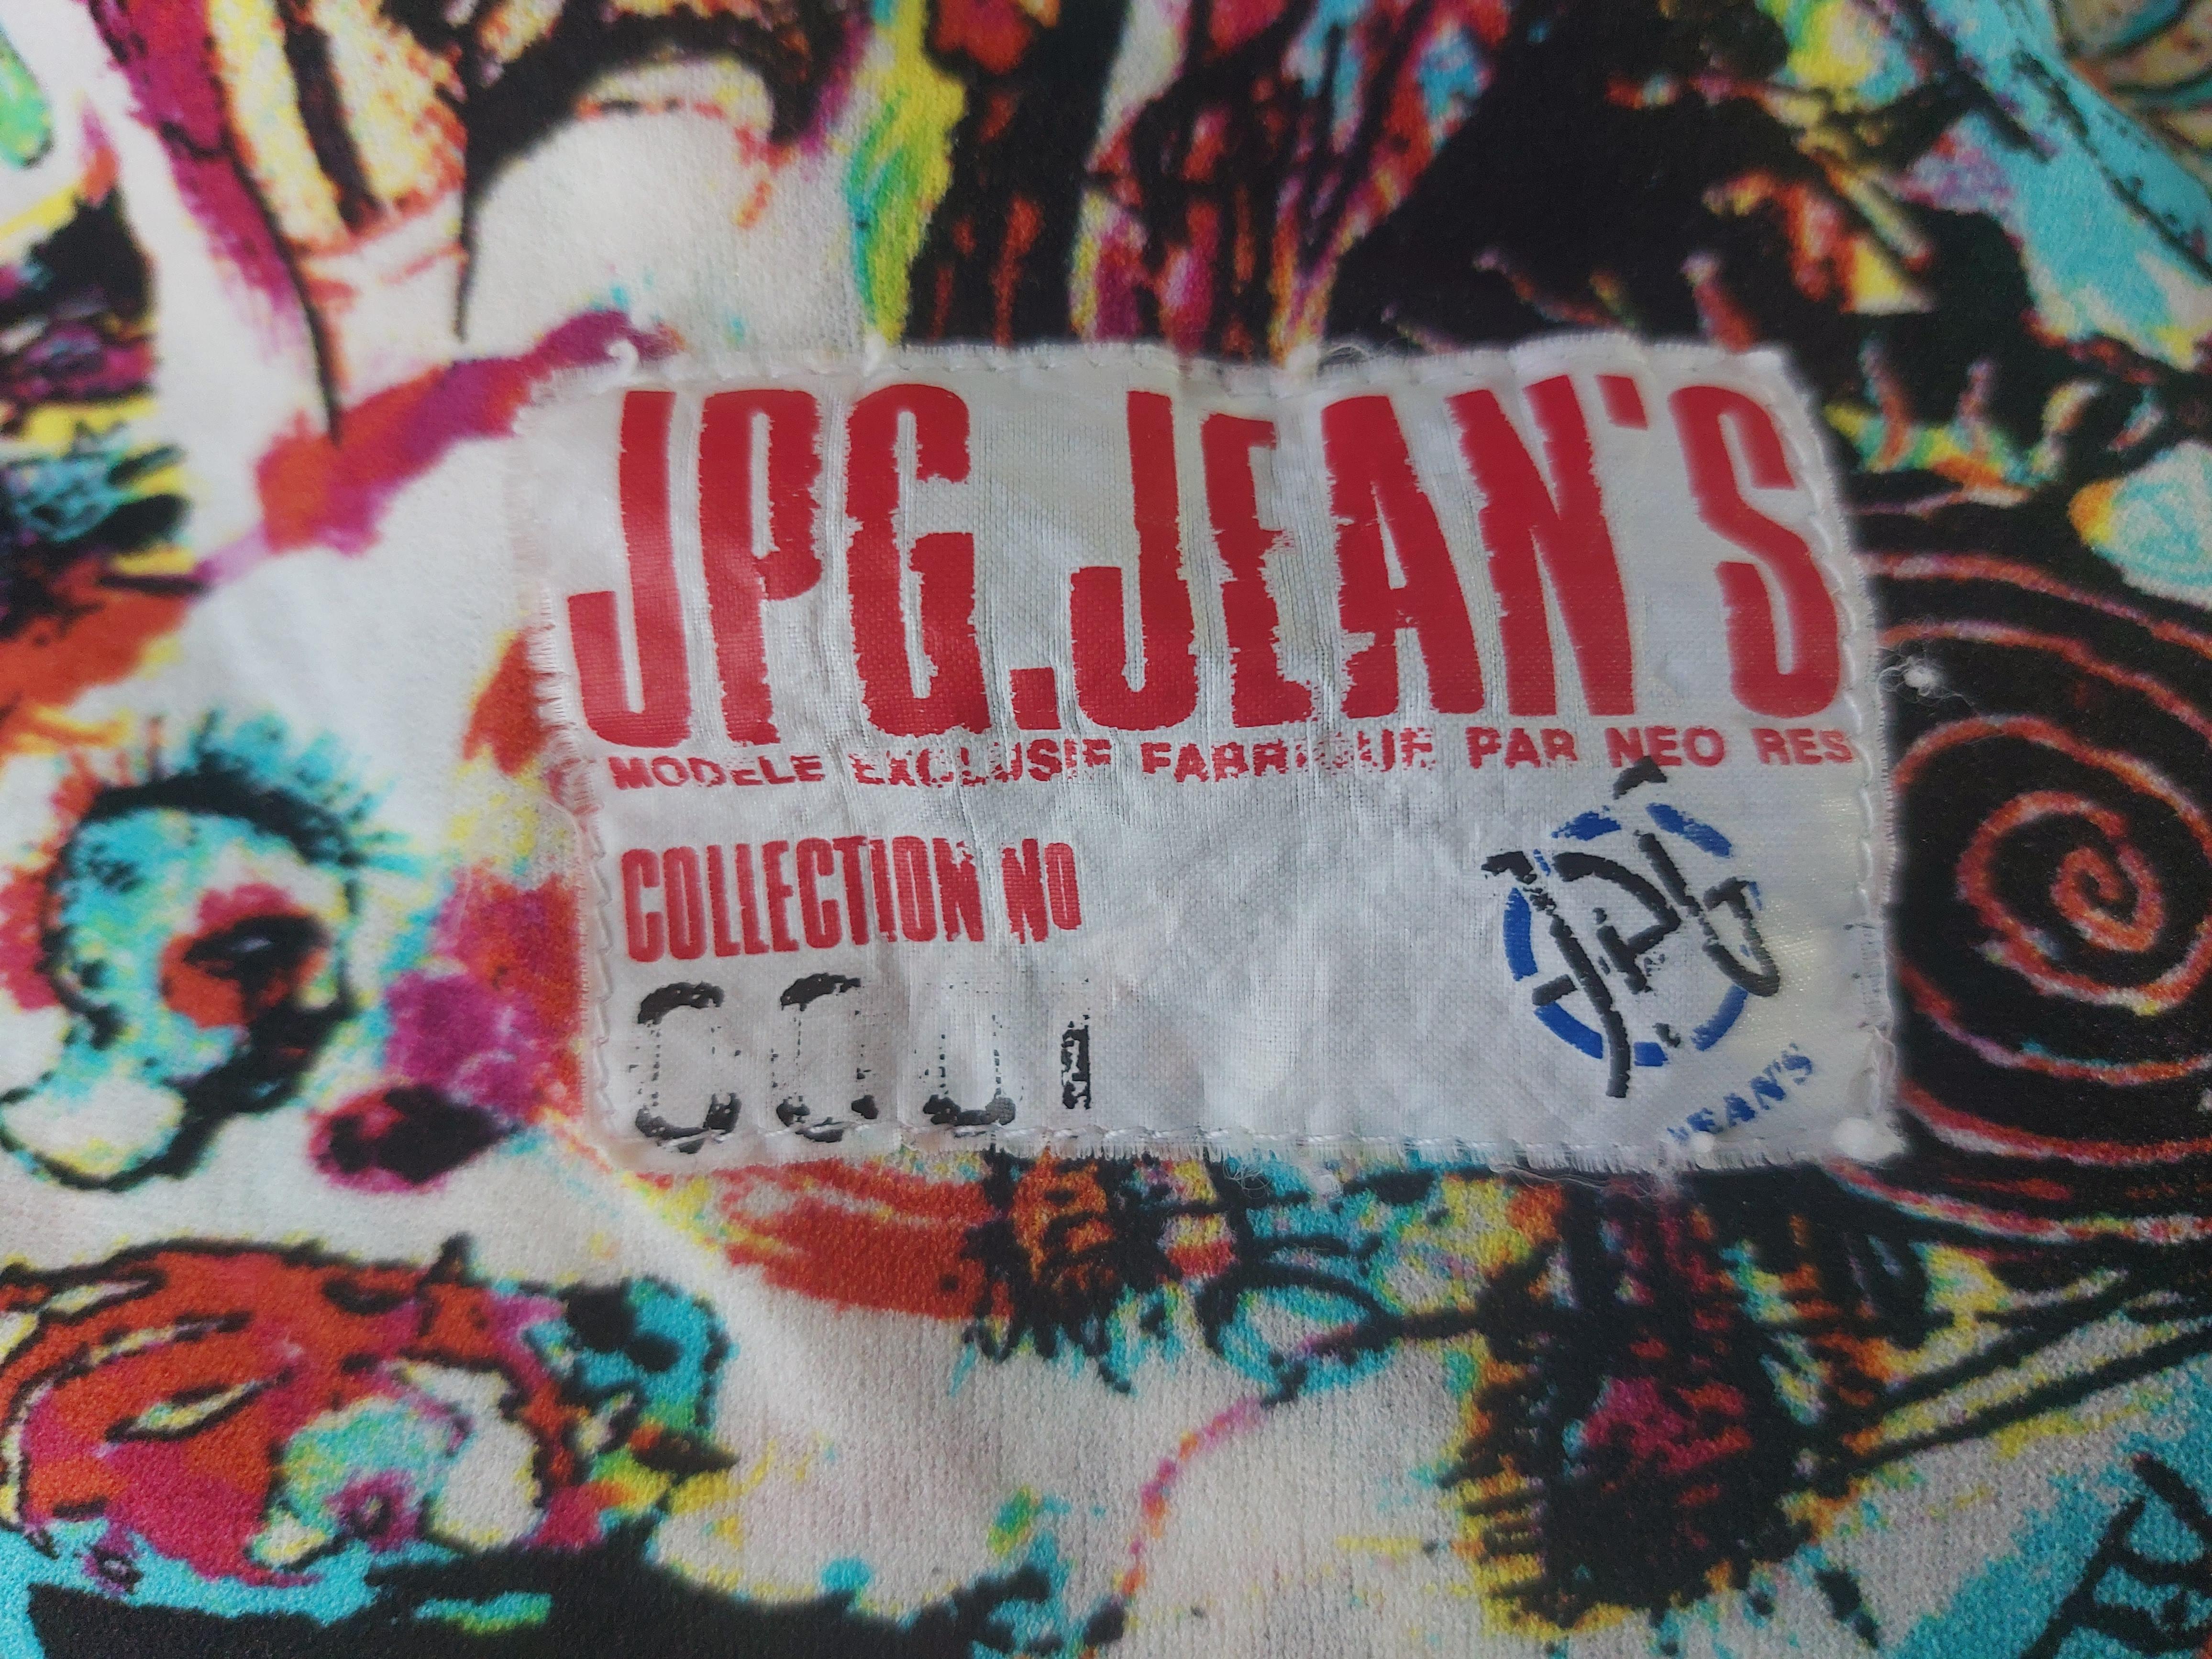 Jean Paul Gaultier JPG Basquiat Opaque mesh sketch graffiti comic street art vintage 90s Optical Butterfly Maxi Long Tattoo Dress Robe

Robe longue Jean Paul Gaultier collection Jeans 0001, en maille opaque extensible avec motifs graffiti, esquisse